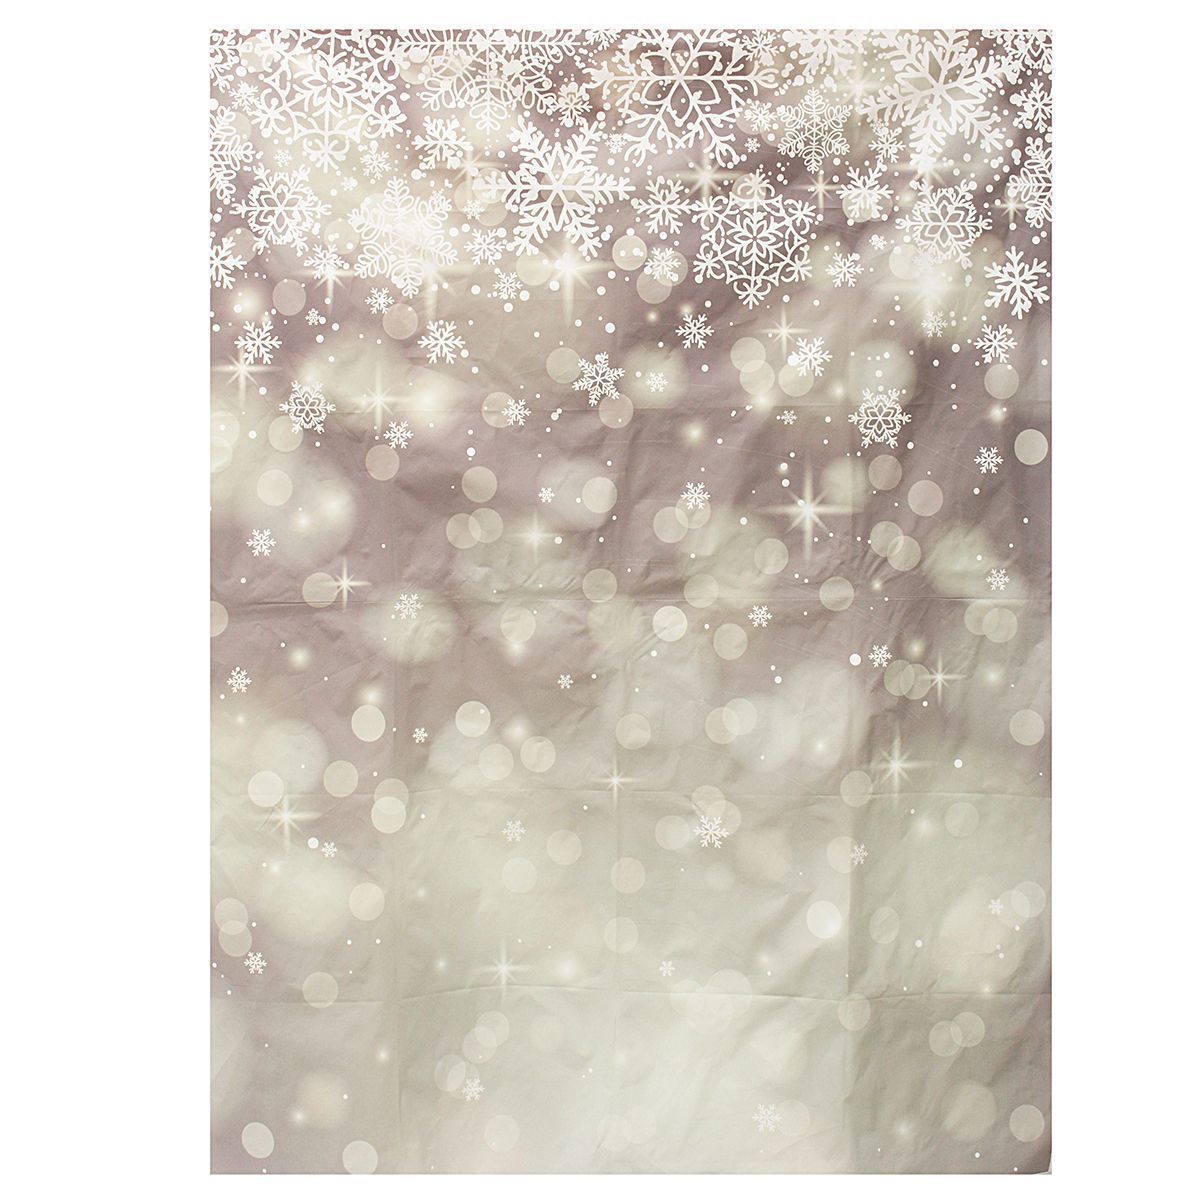 5x7ft-Vinyl-Christmas-Snow-Photography-Backdrop-Background-Studio-Photo-Props-1380954